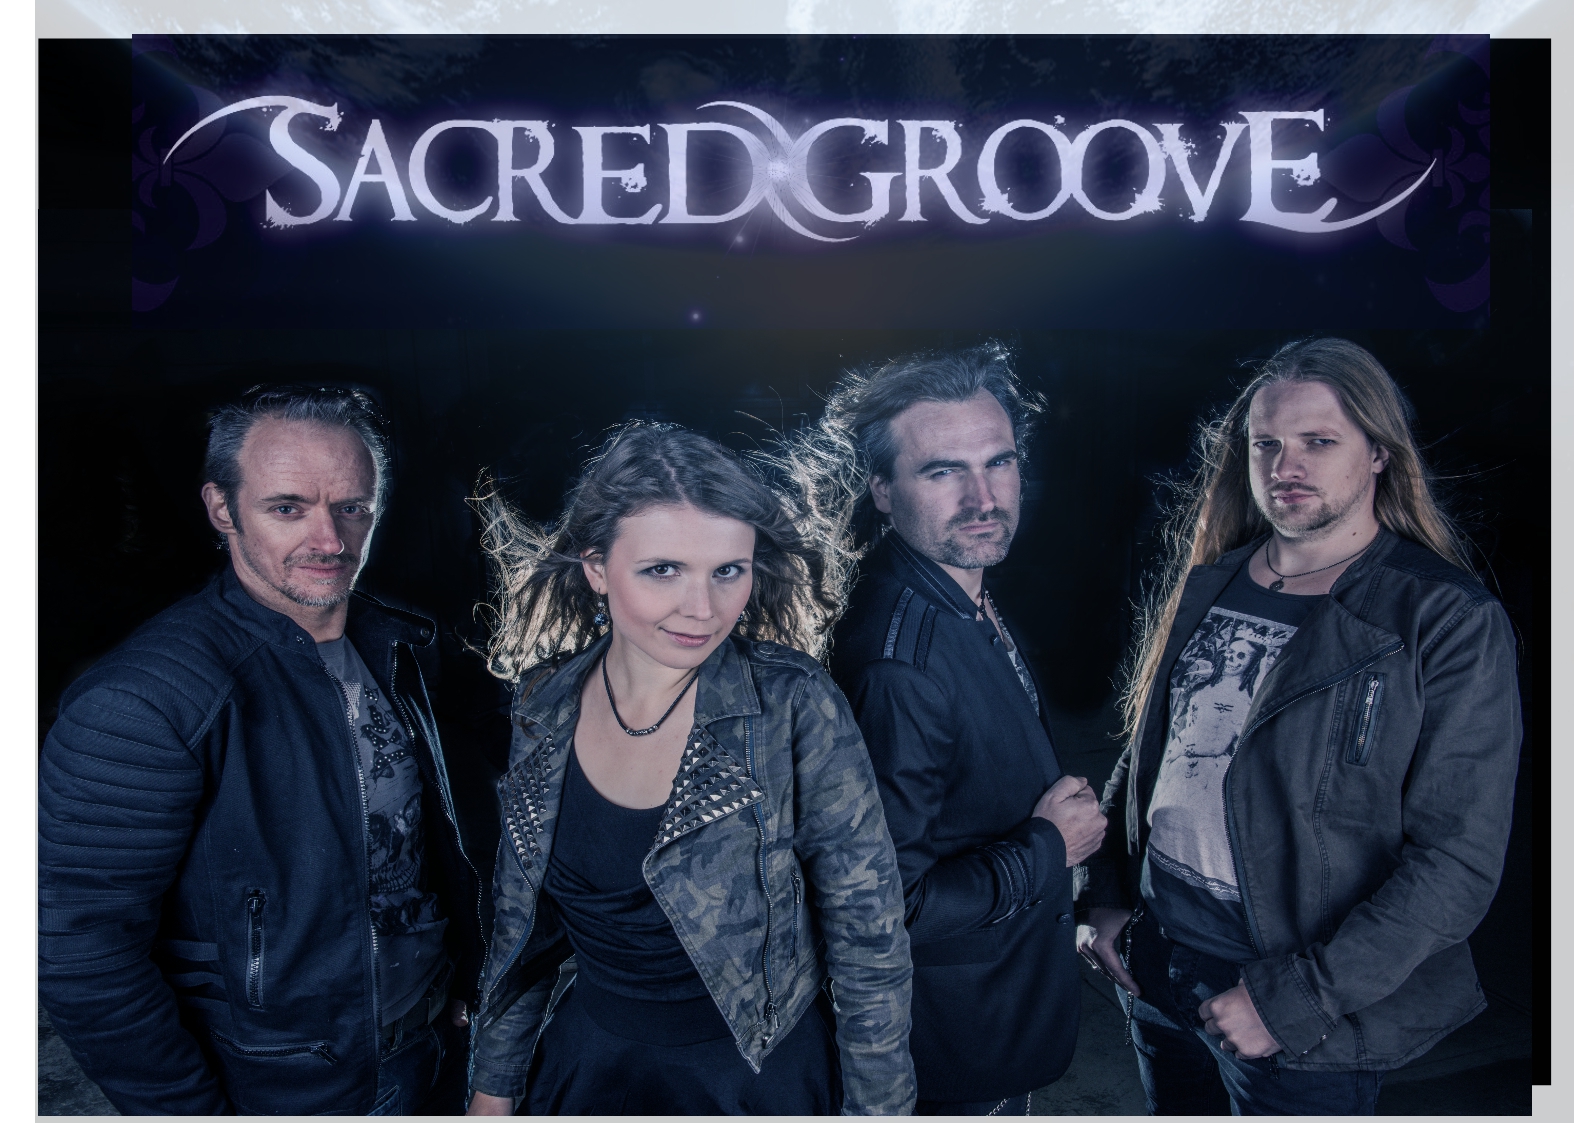 (c) Sacred-groove.com